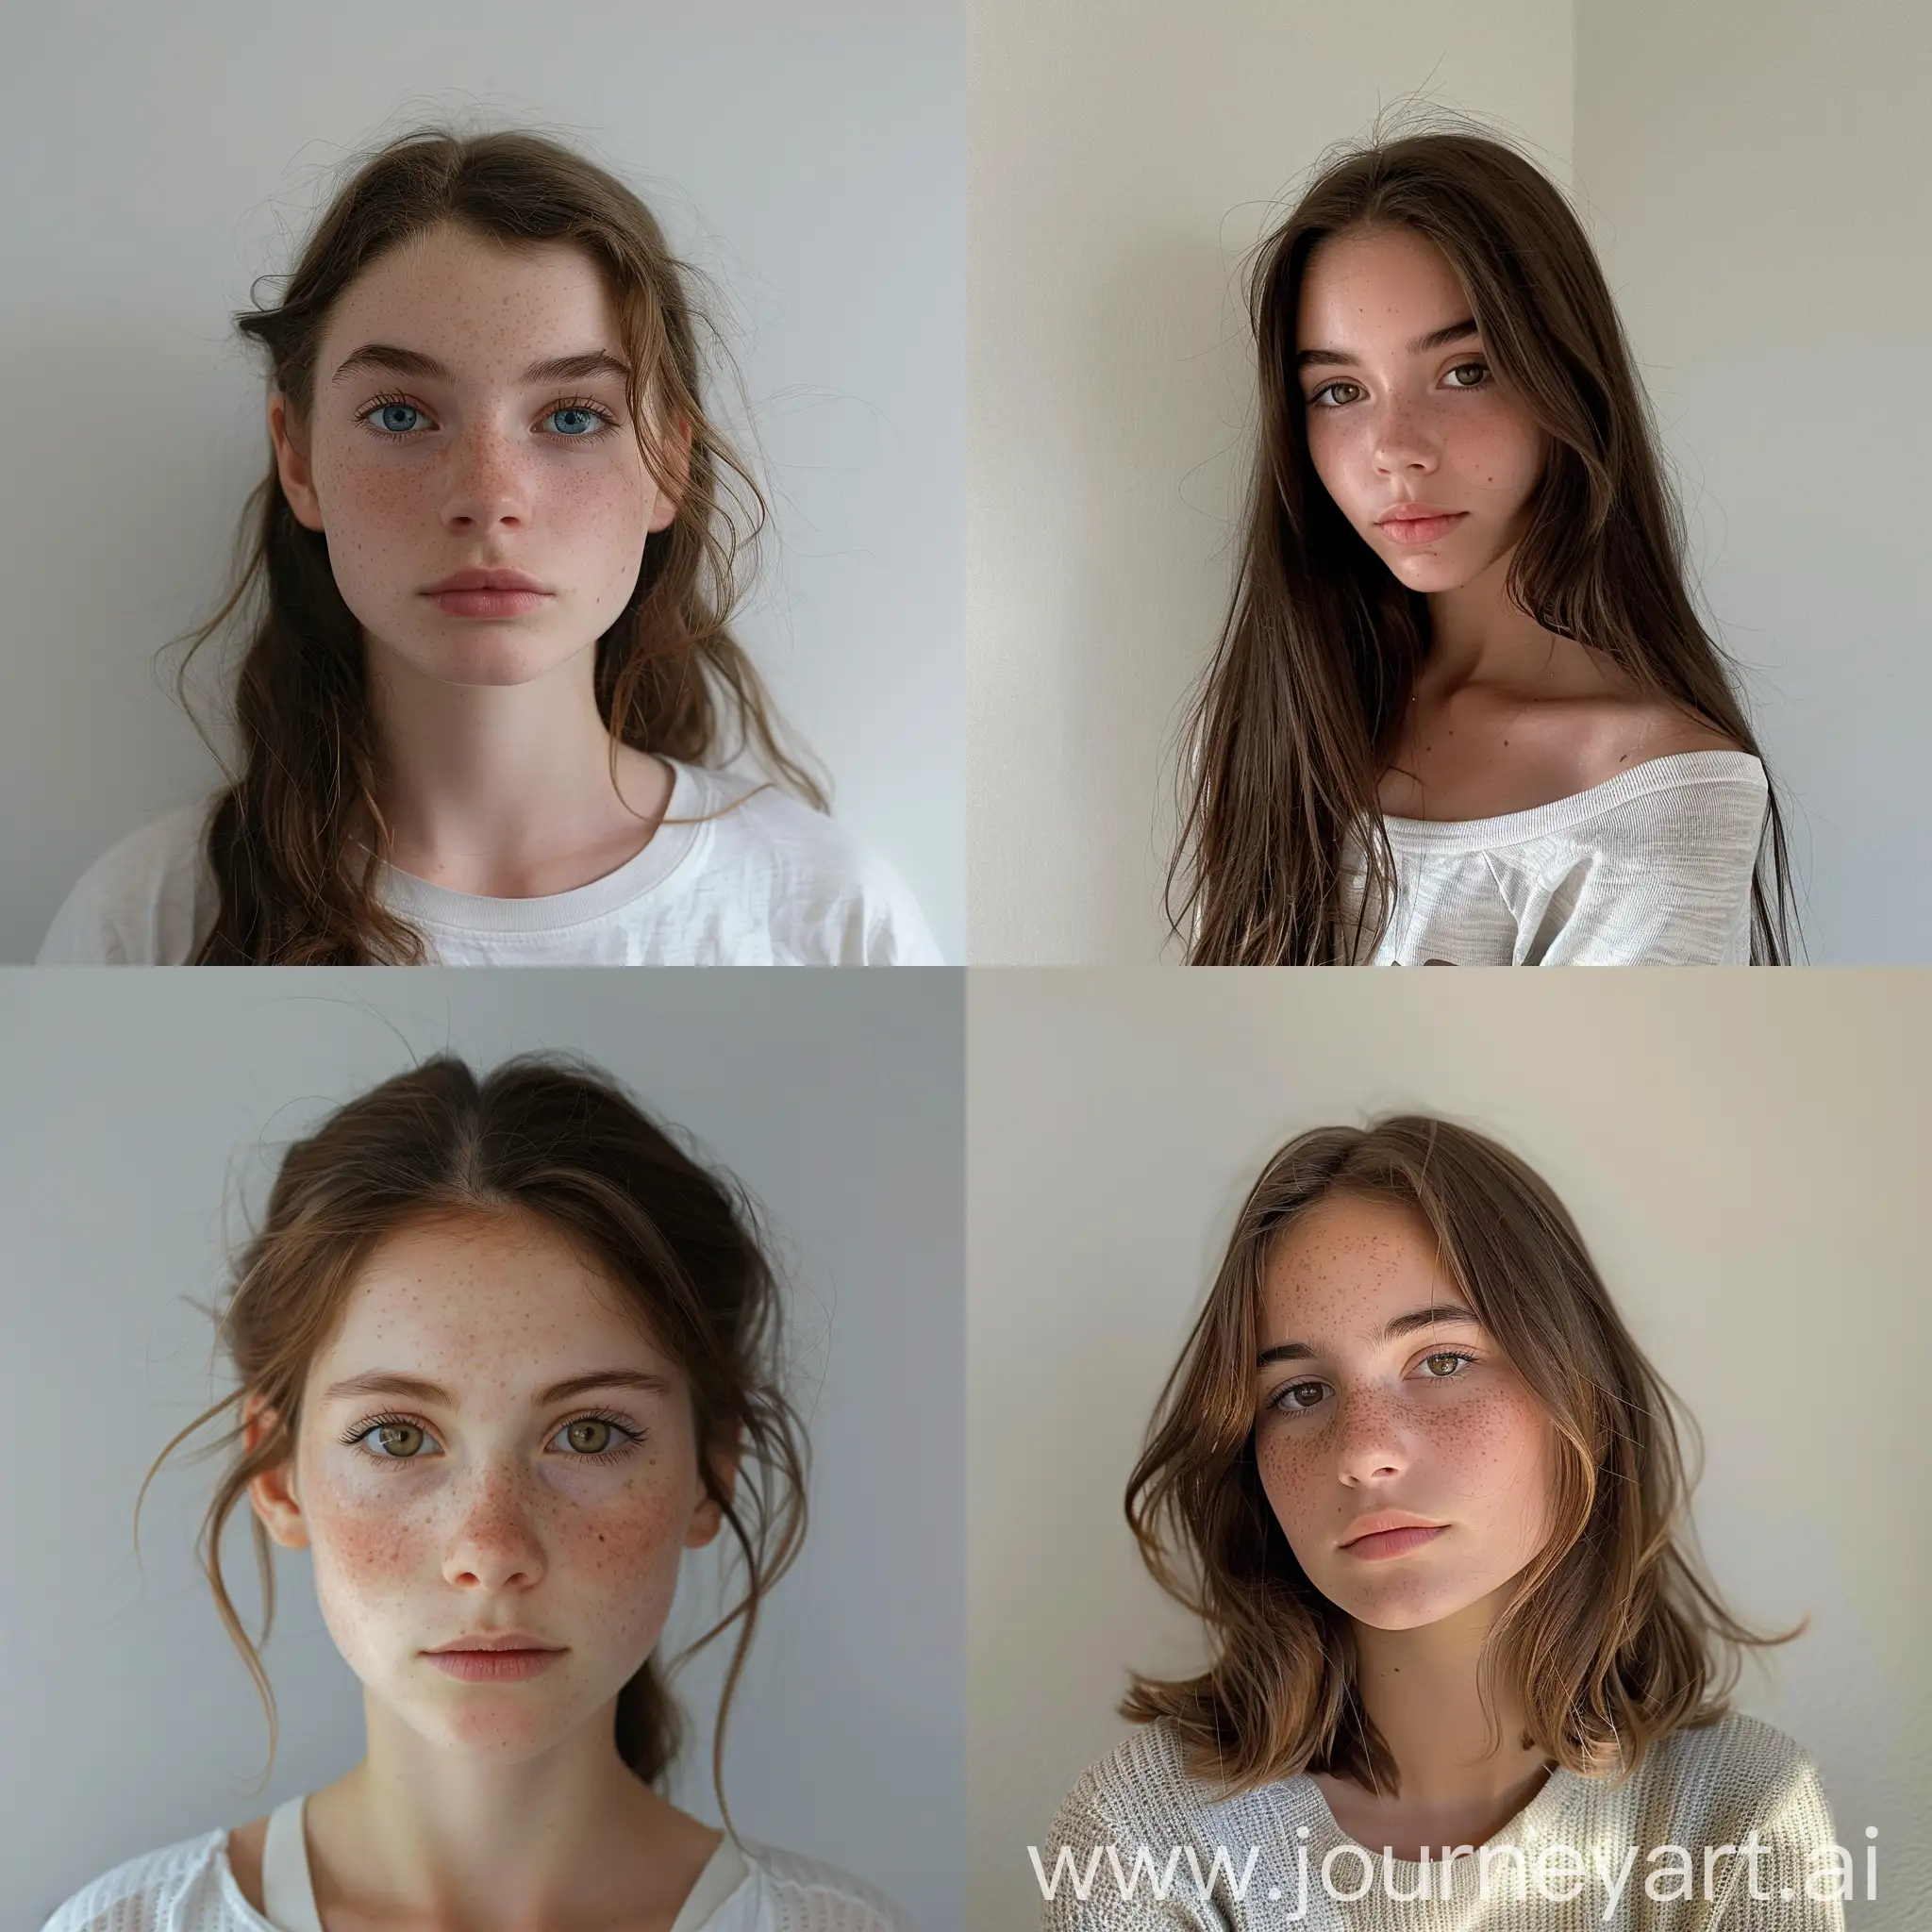 Realistic-Portrait-of-Average-19YearOld-Girl-on-White-Background